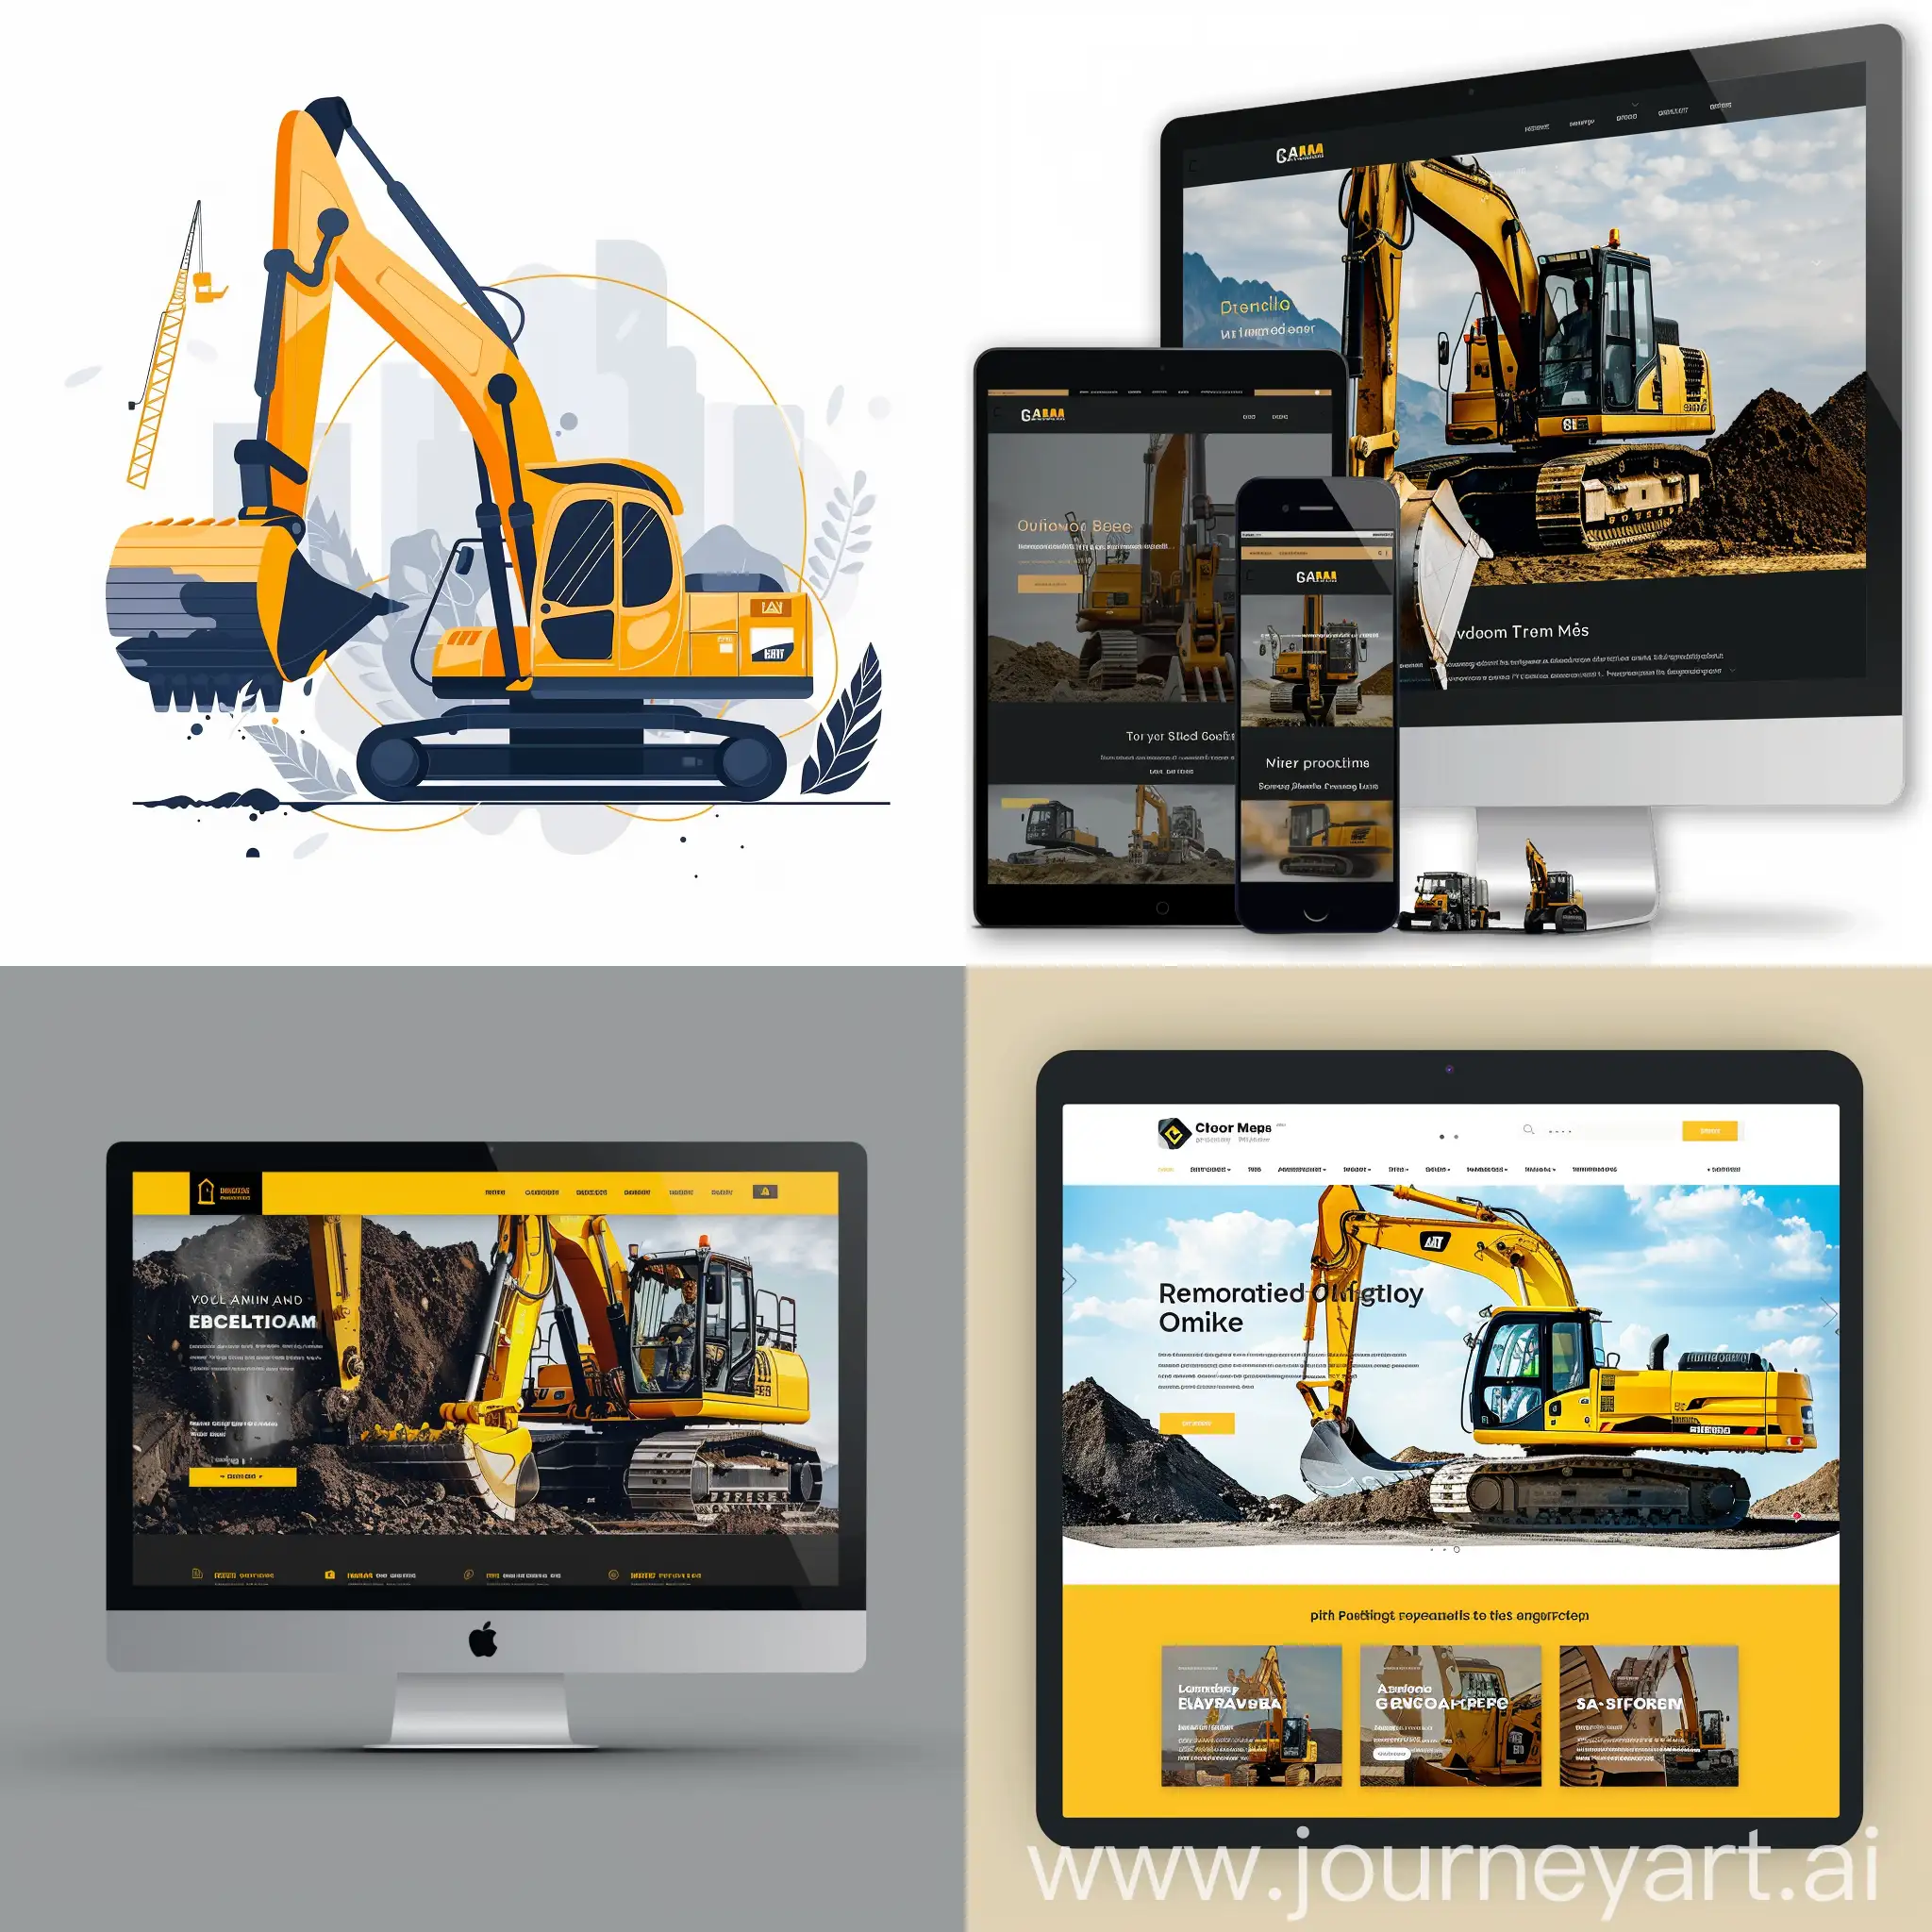 Minimalistic-Style-Heavy-Construction-Equipment-Rental-Website